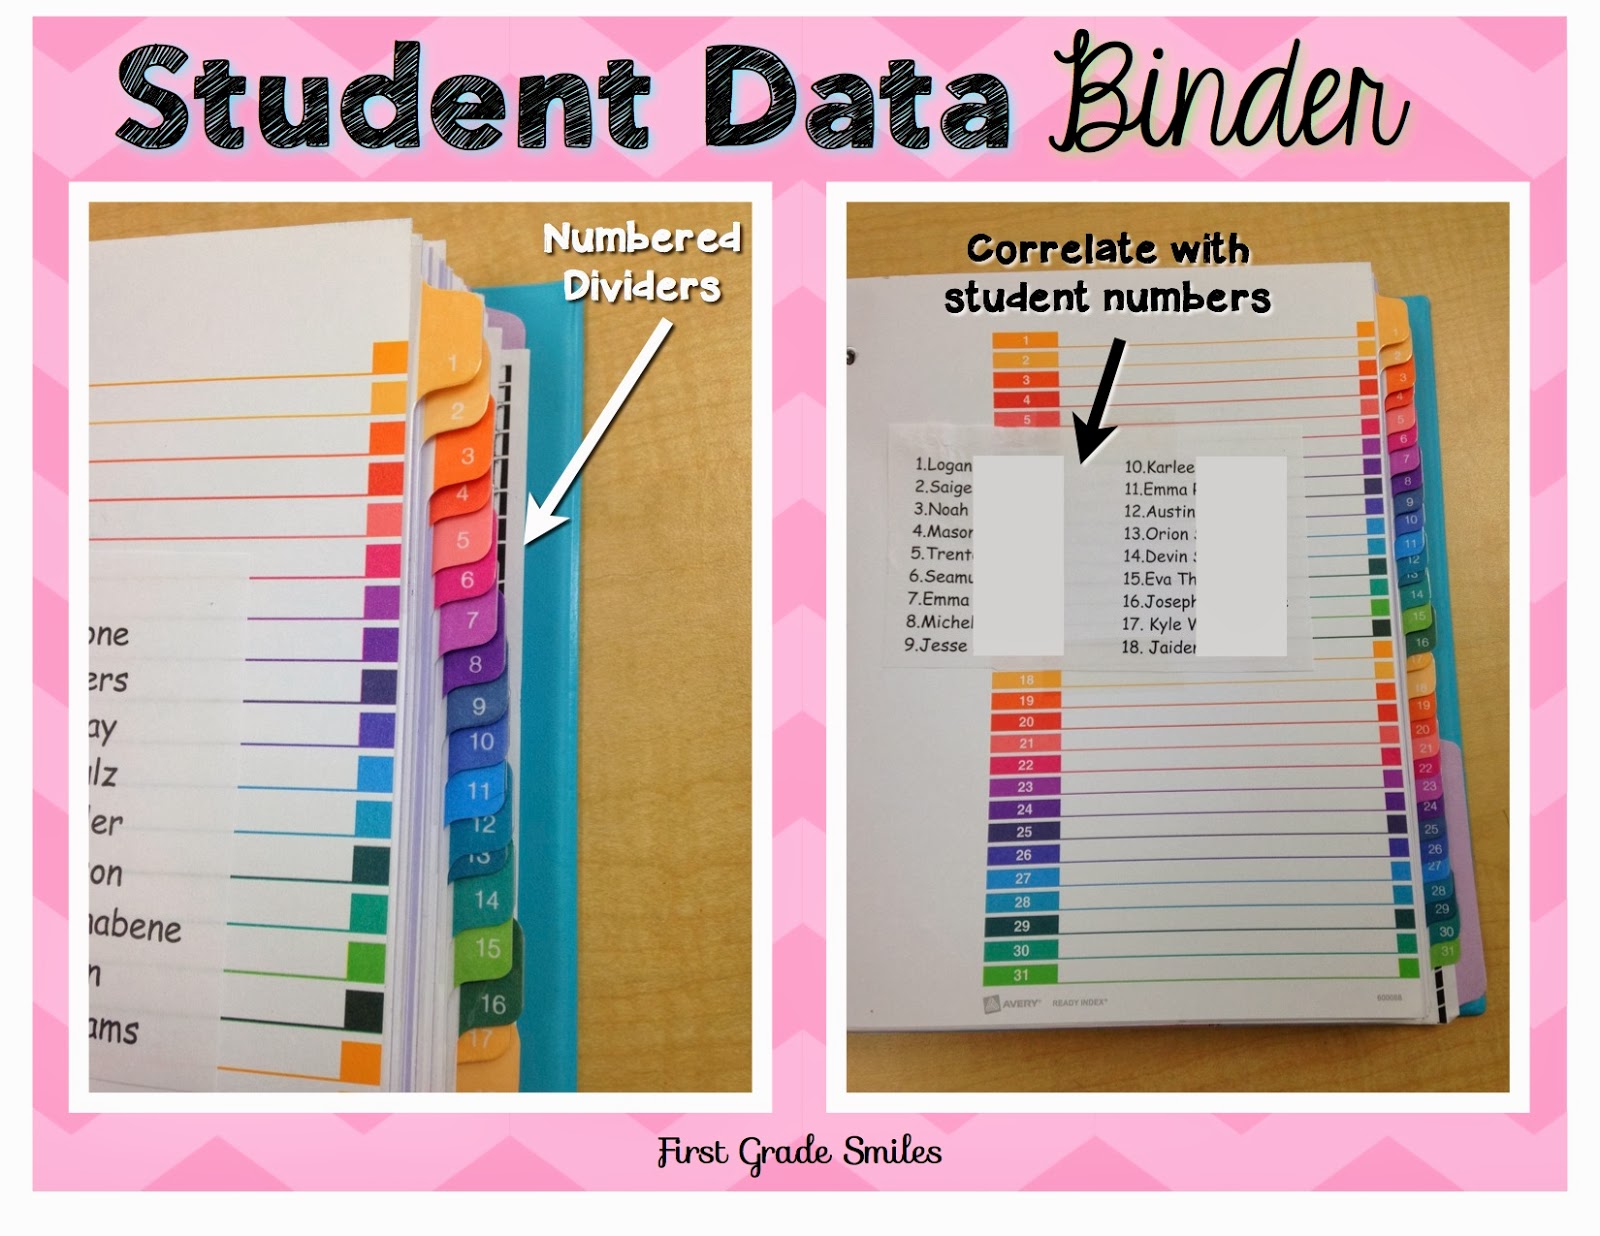 first-grade-smiles-bright-ideas-organizing-student-data